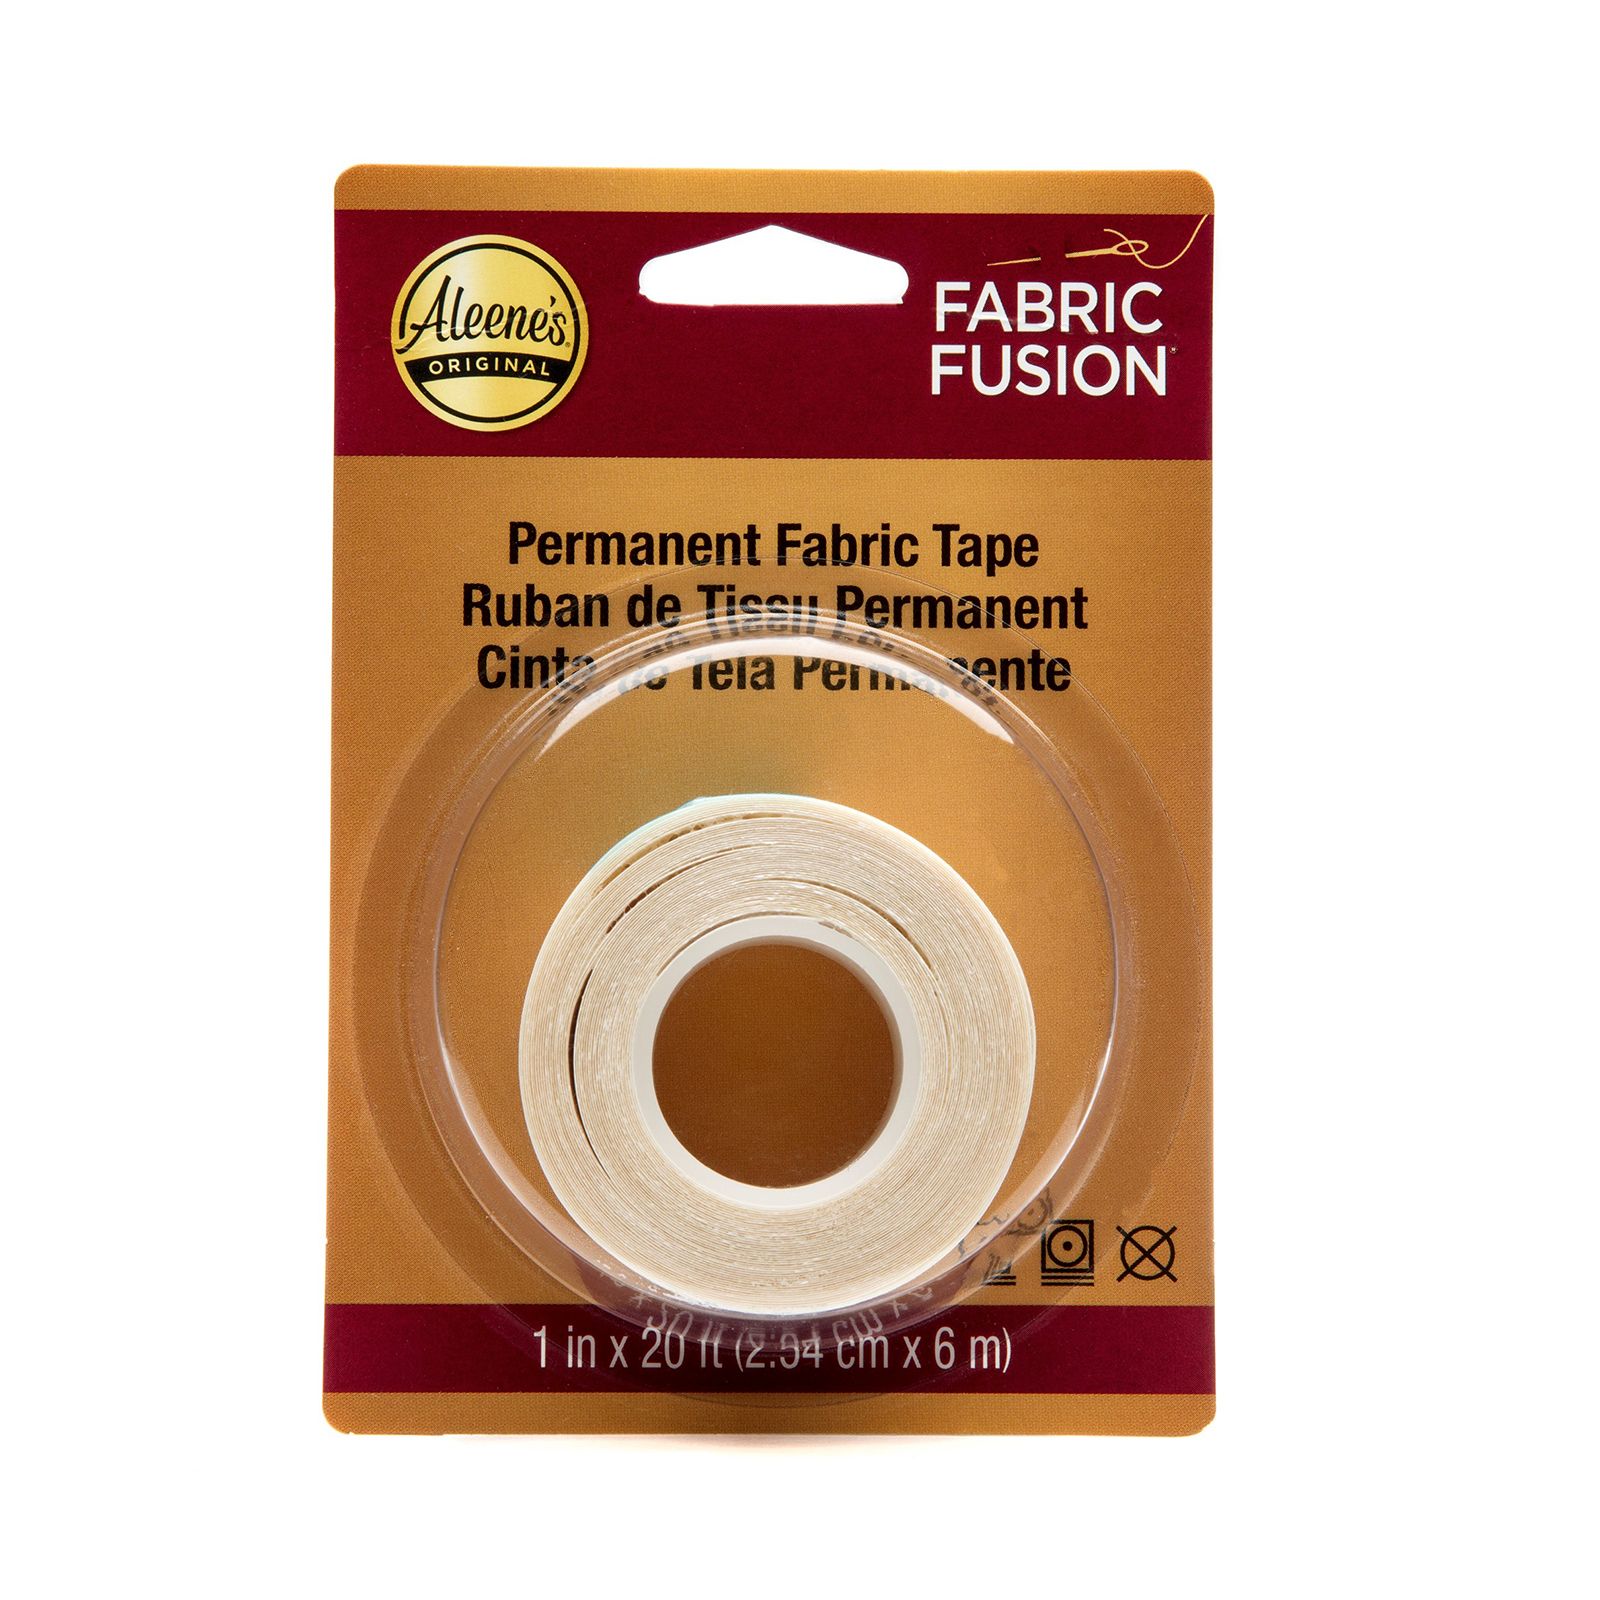 Aleene's • Fabric fusion glue permanent tape 2,54cmx6m